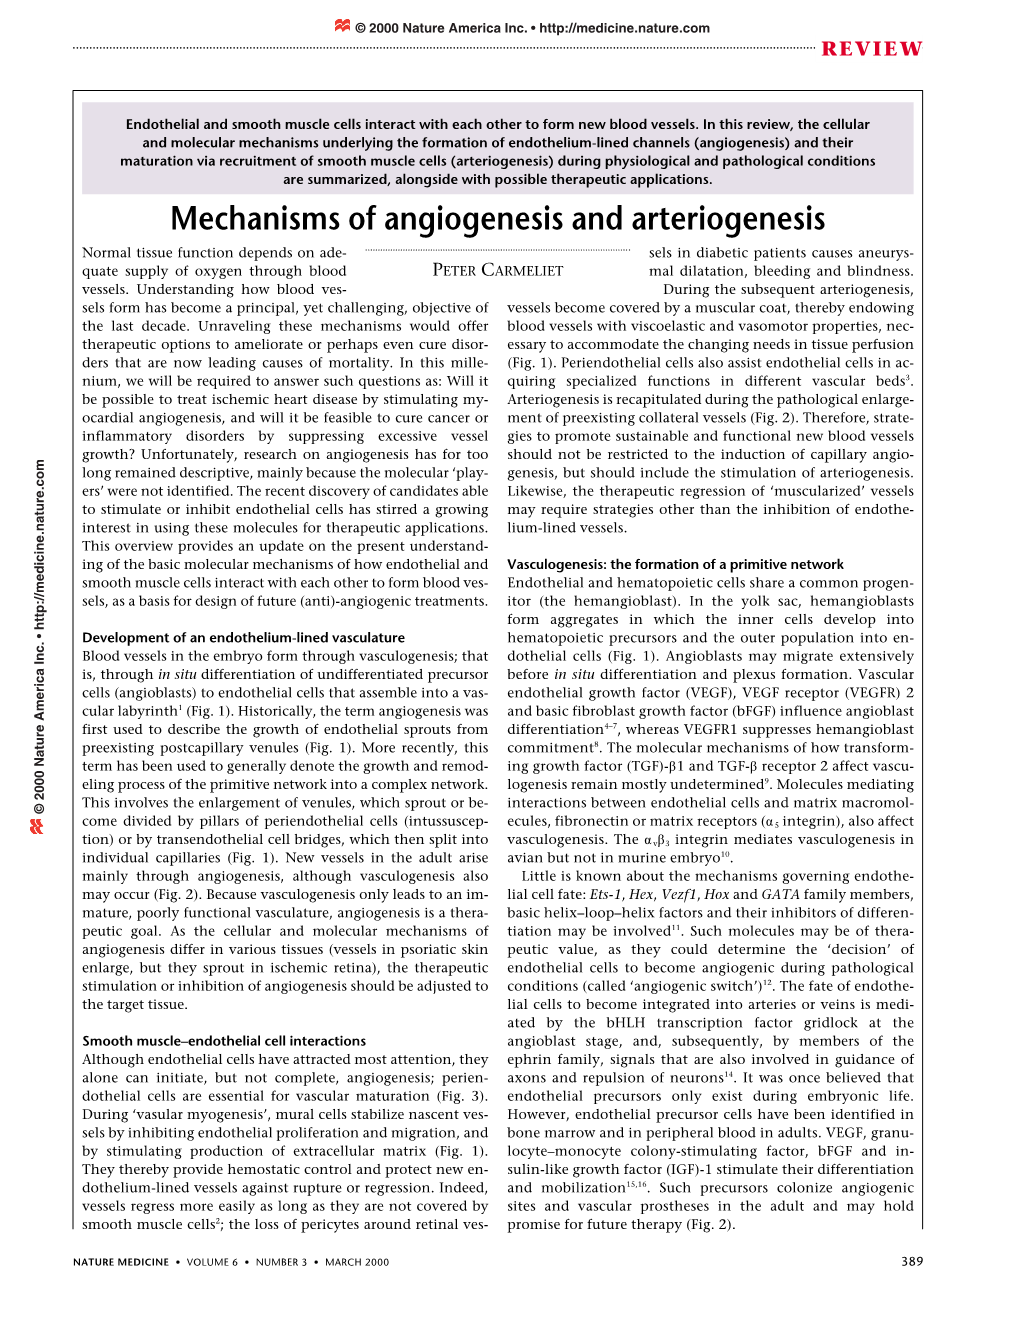 Mechanisms of Angiogenesis and Arteriogenesis